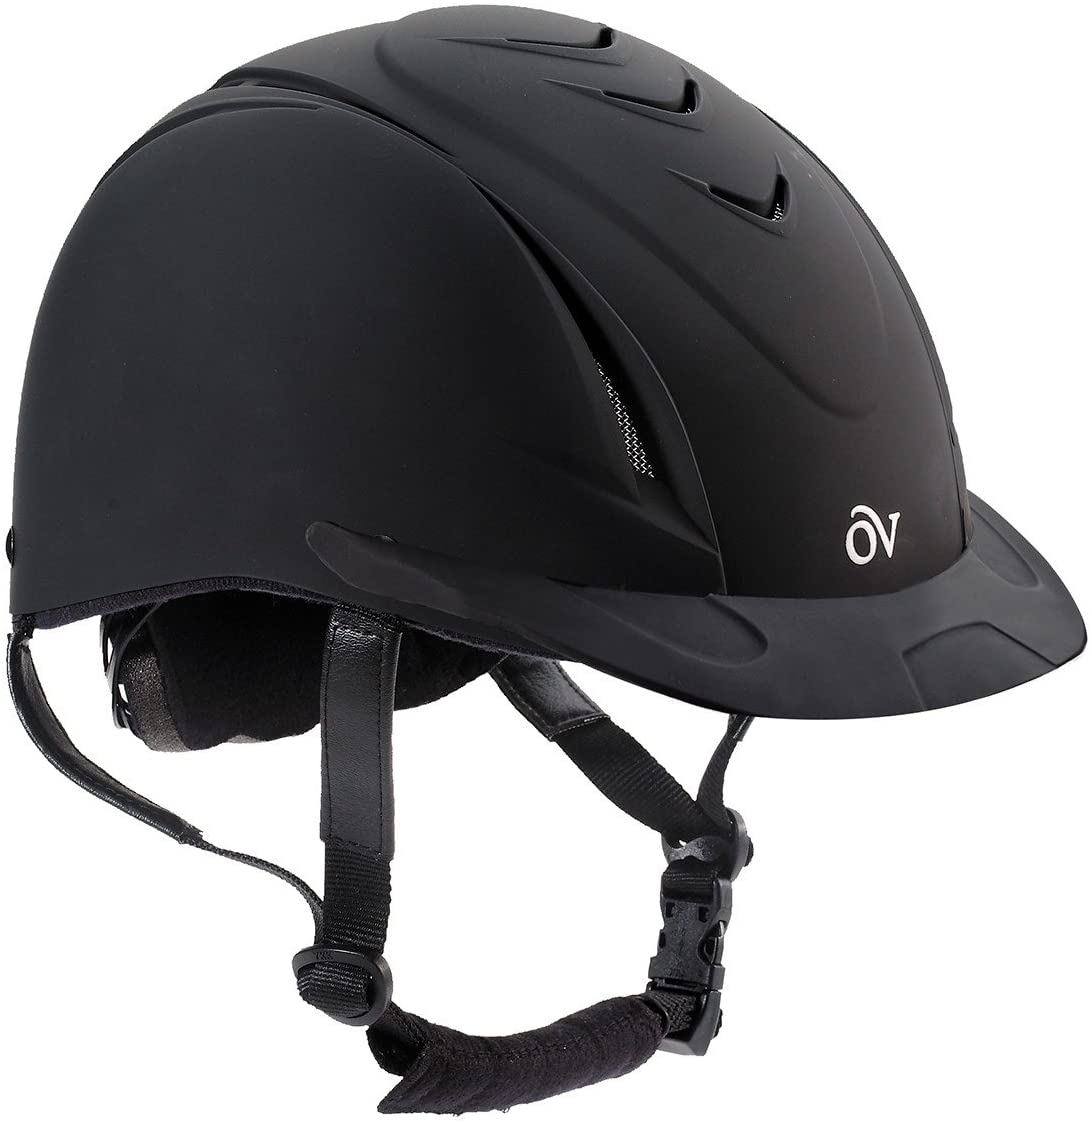 Ovation Best Riding Helmets